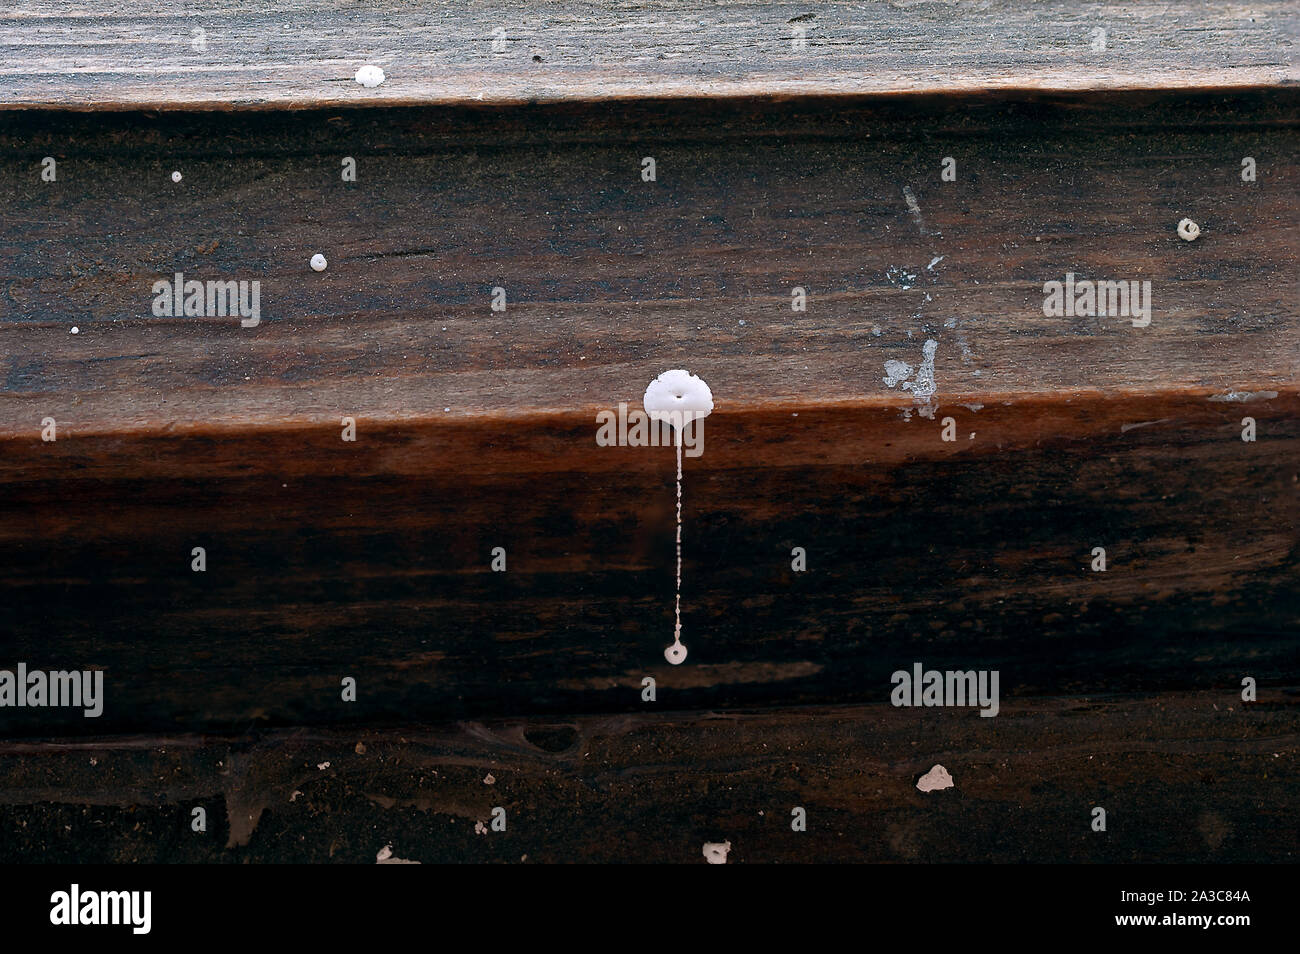 Gota de pintura blanca derramado sobre un bastidor de madera con pintura de polvo y manchas de pegamento. Concepto de renovación desordenado. Foto de stock